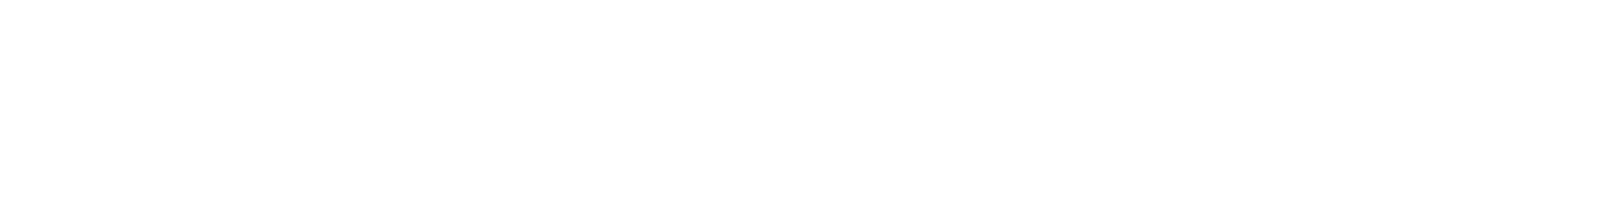 Stenon logo